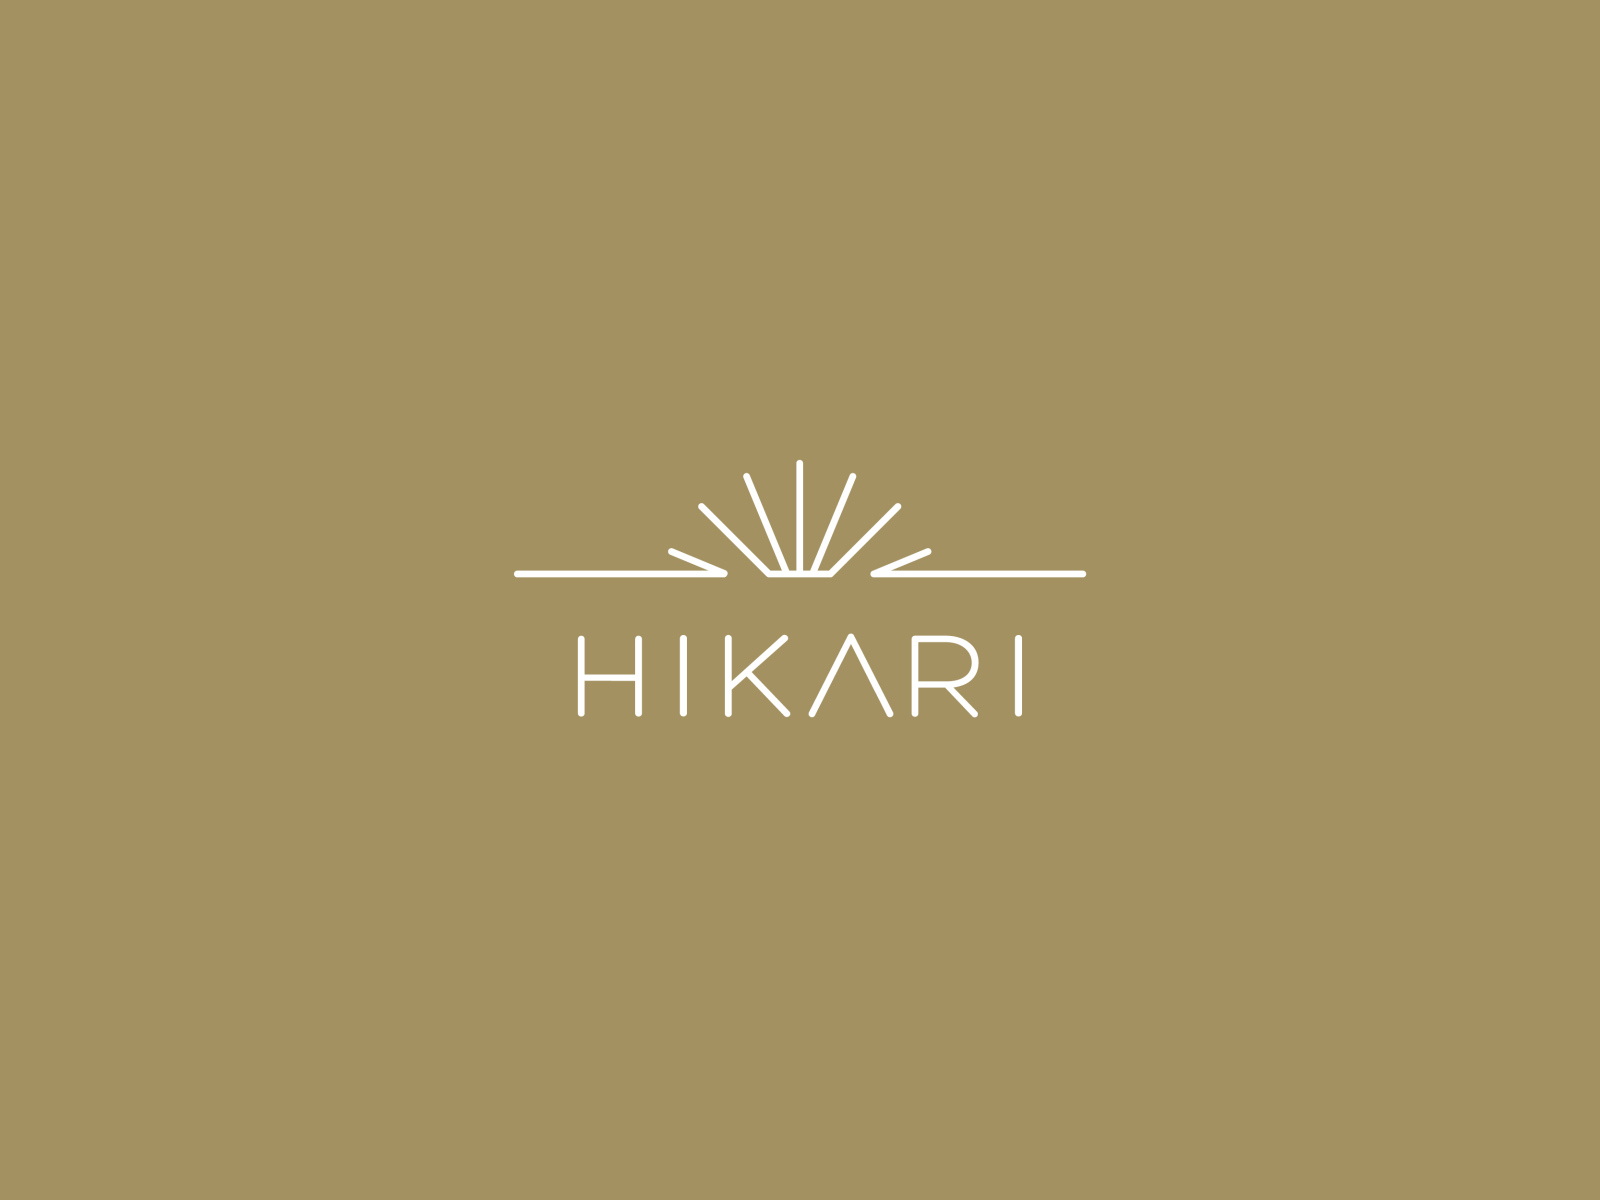 Hikari Apartments by Will Killen on Dribbble